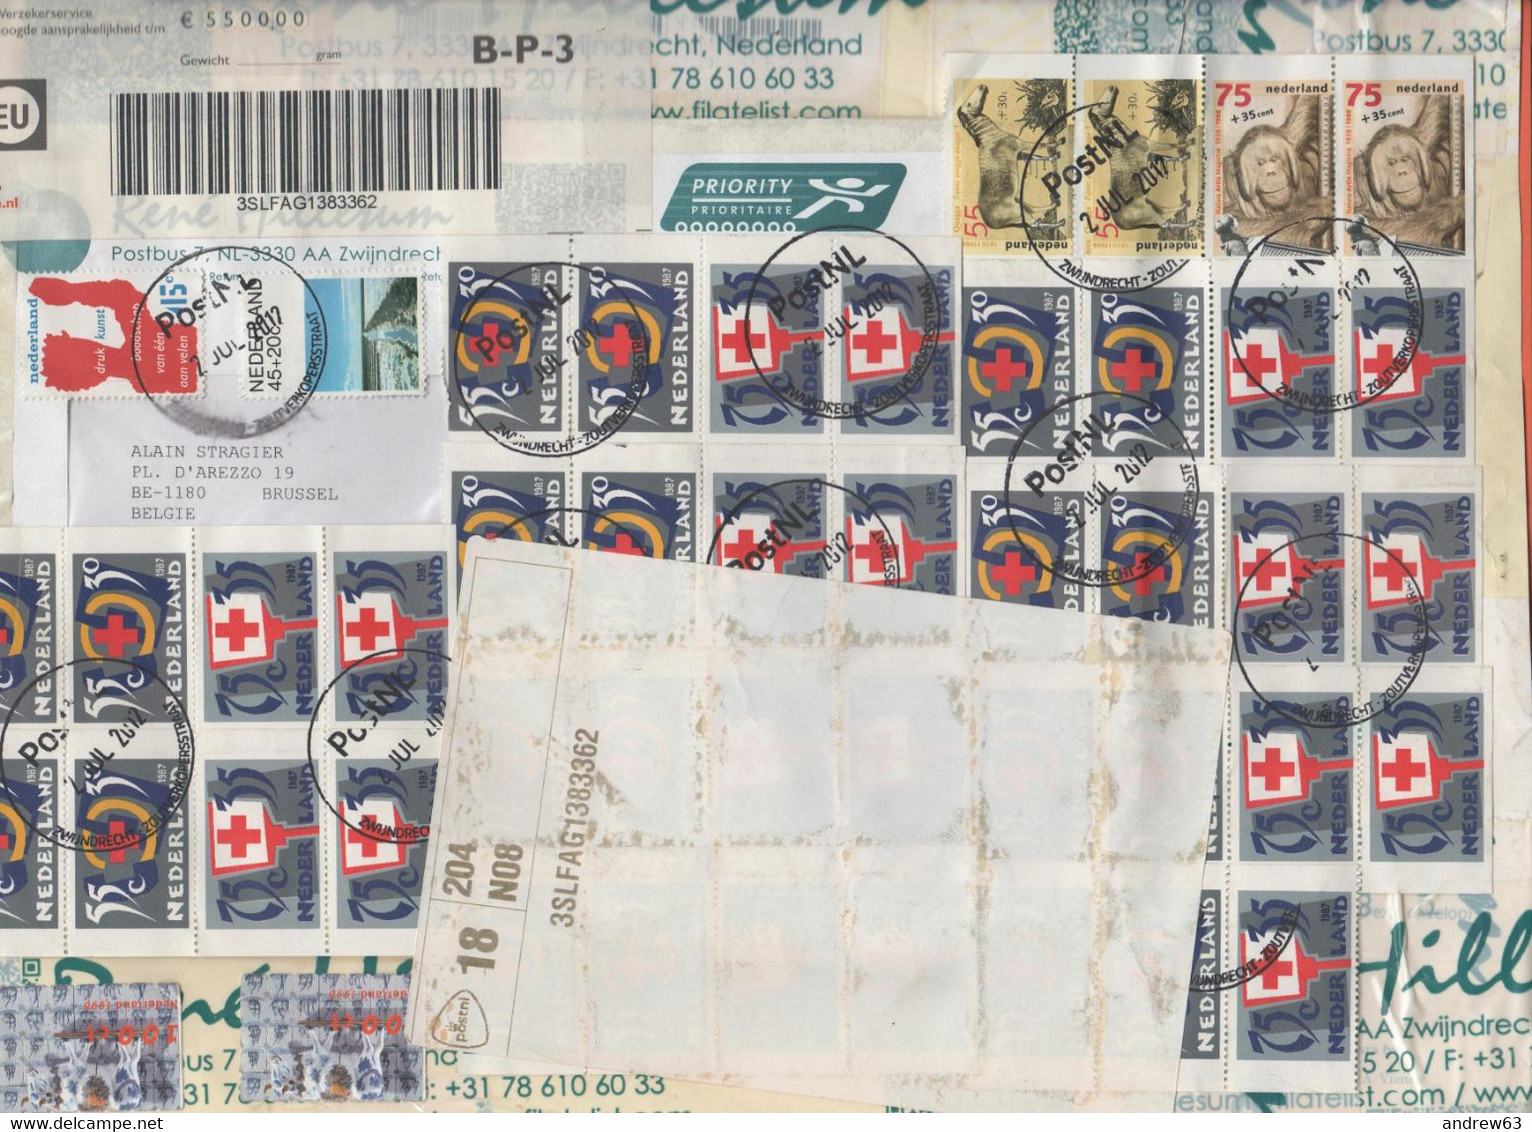 OLANDA - NEDERLAND - Paesi Bassi - 2012 - Big Fragment With Several Stamps - Registered - Viaggiata Da Zwijndrecht Per B - Lettres & Documents